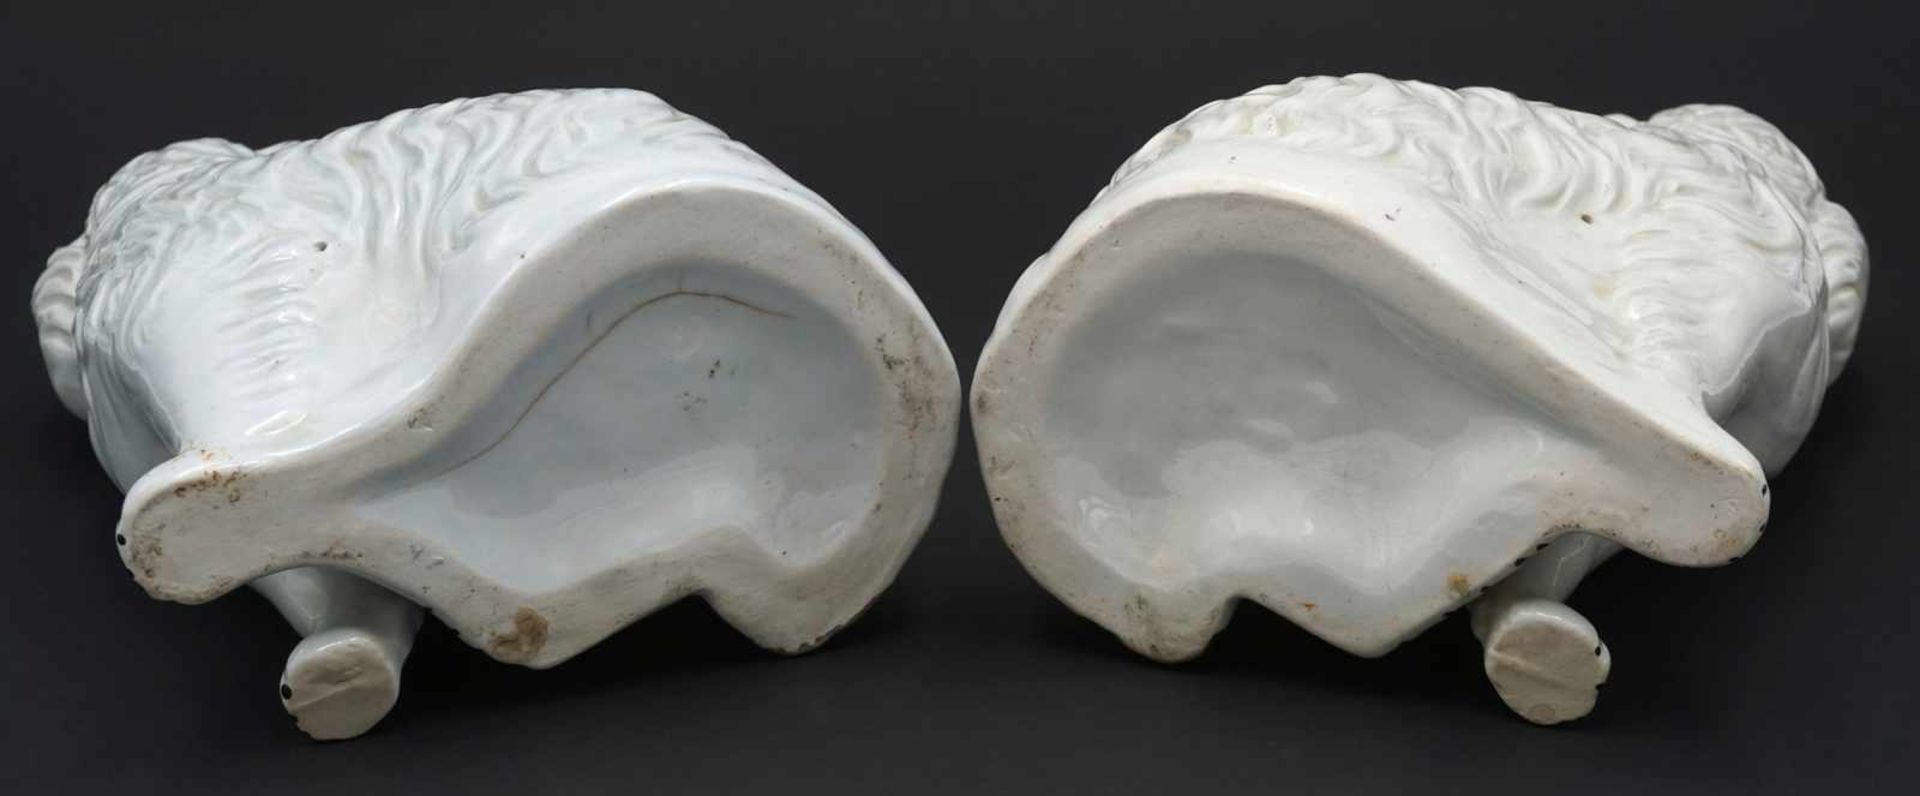 Beswick Keramik Kaminhunde / Fensterhunde, 1. Hälfte 20. Jh.zwei Puffhunde, England, glasiert, - Bild 4 aus 4